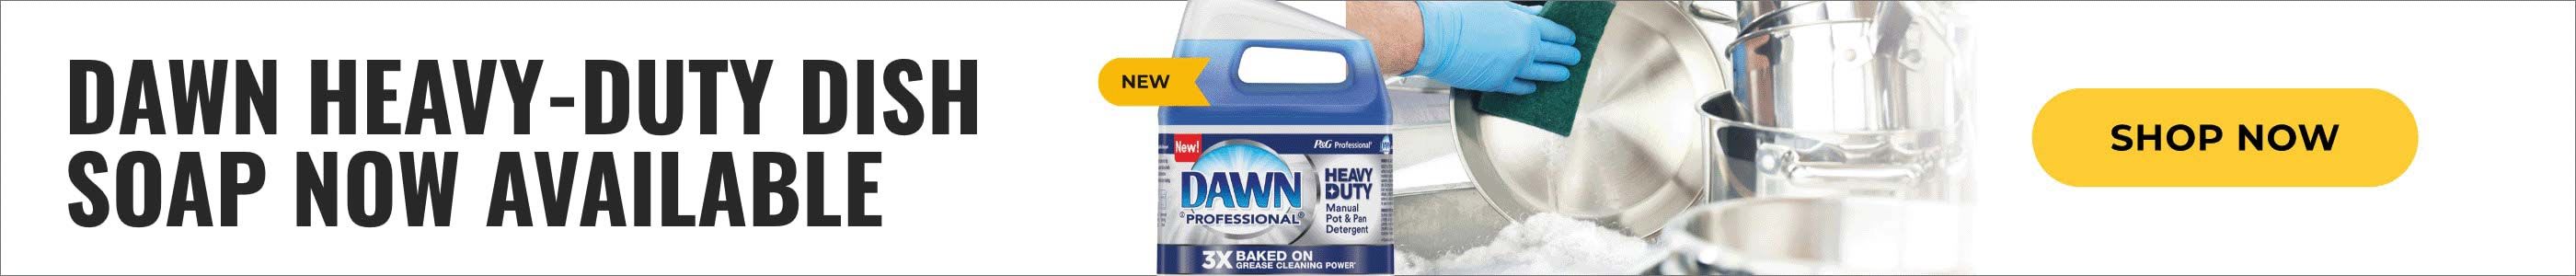 Dawn Heavy-Duty Dish Soap Now Available